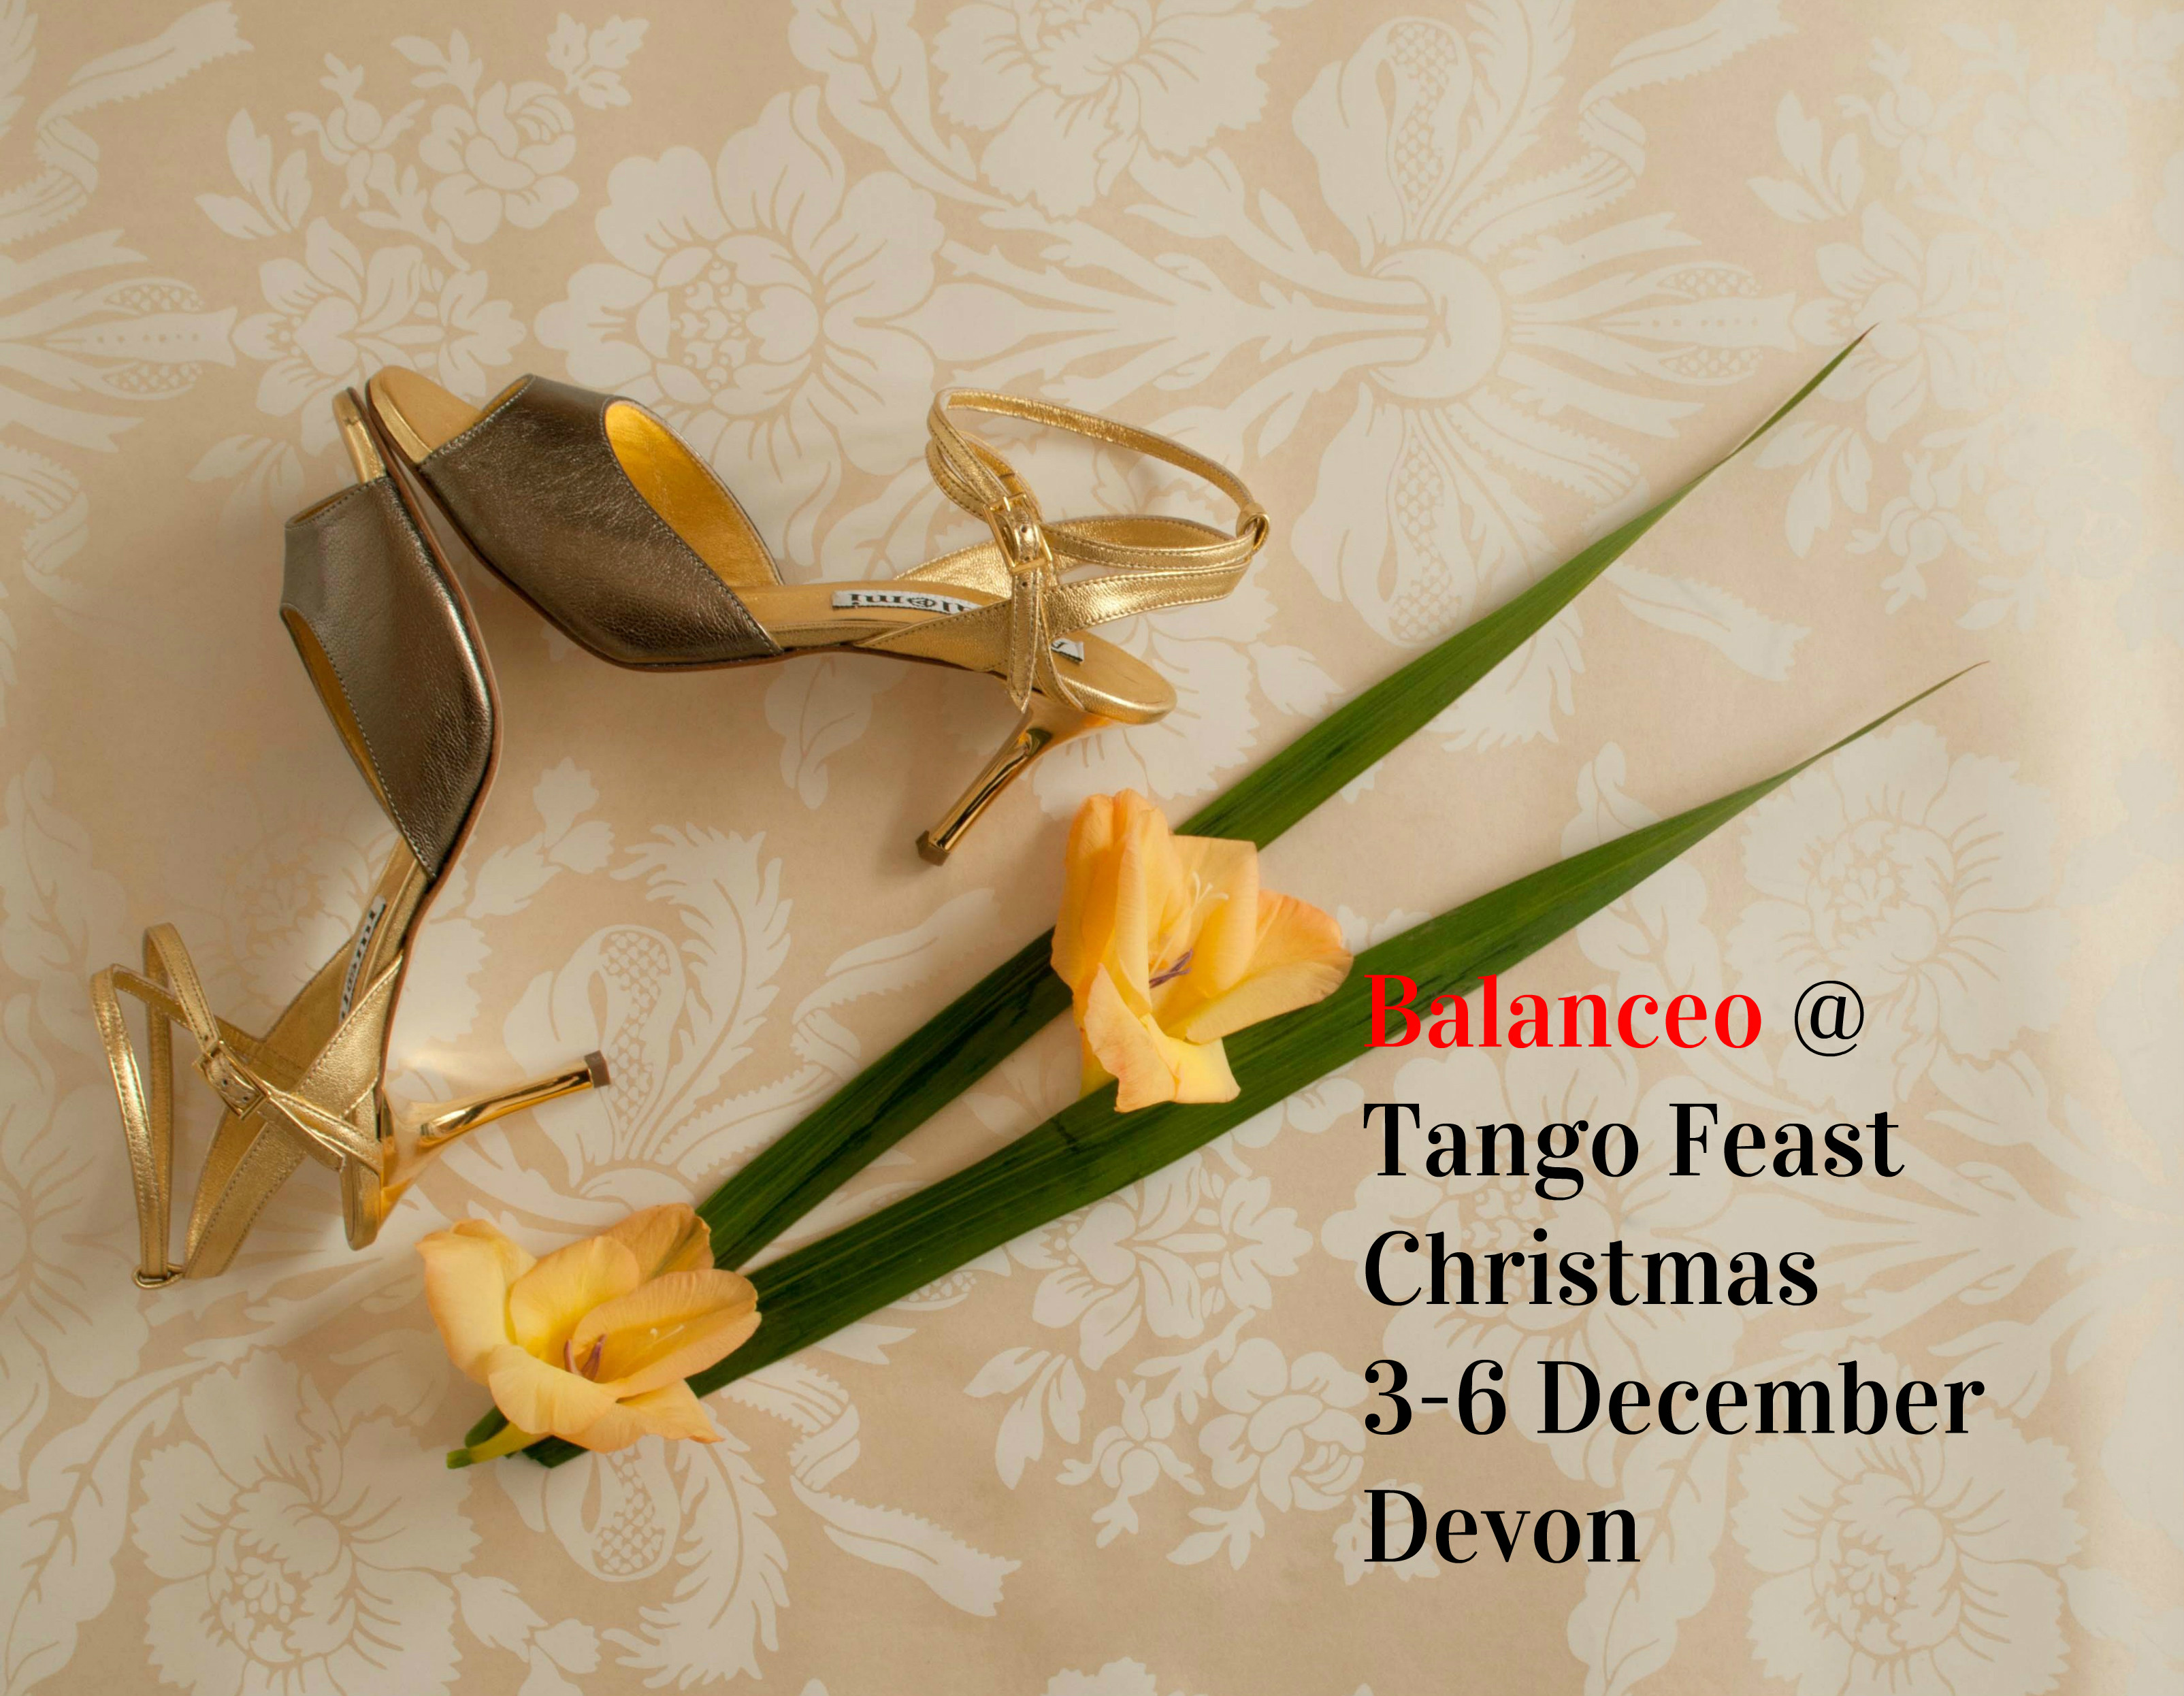 Balanceo @ Tango Feast Christmas